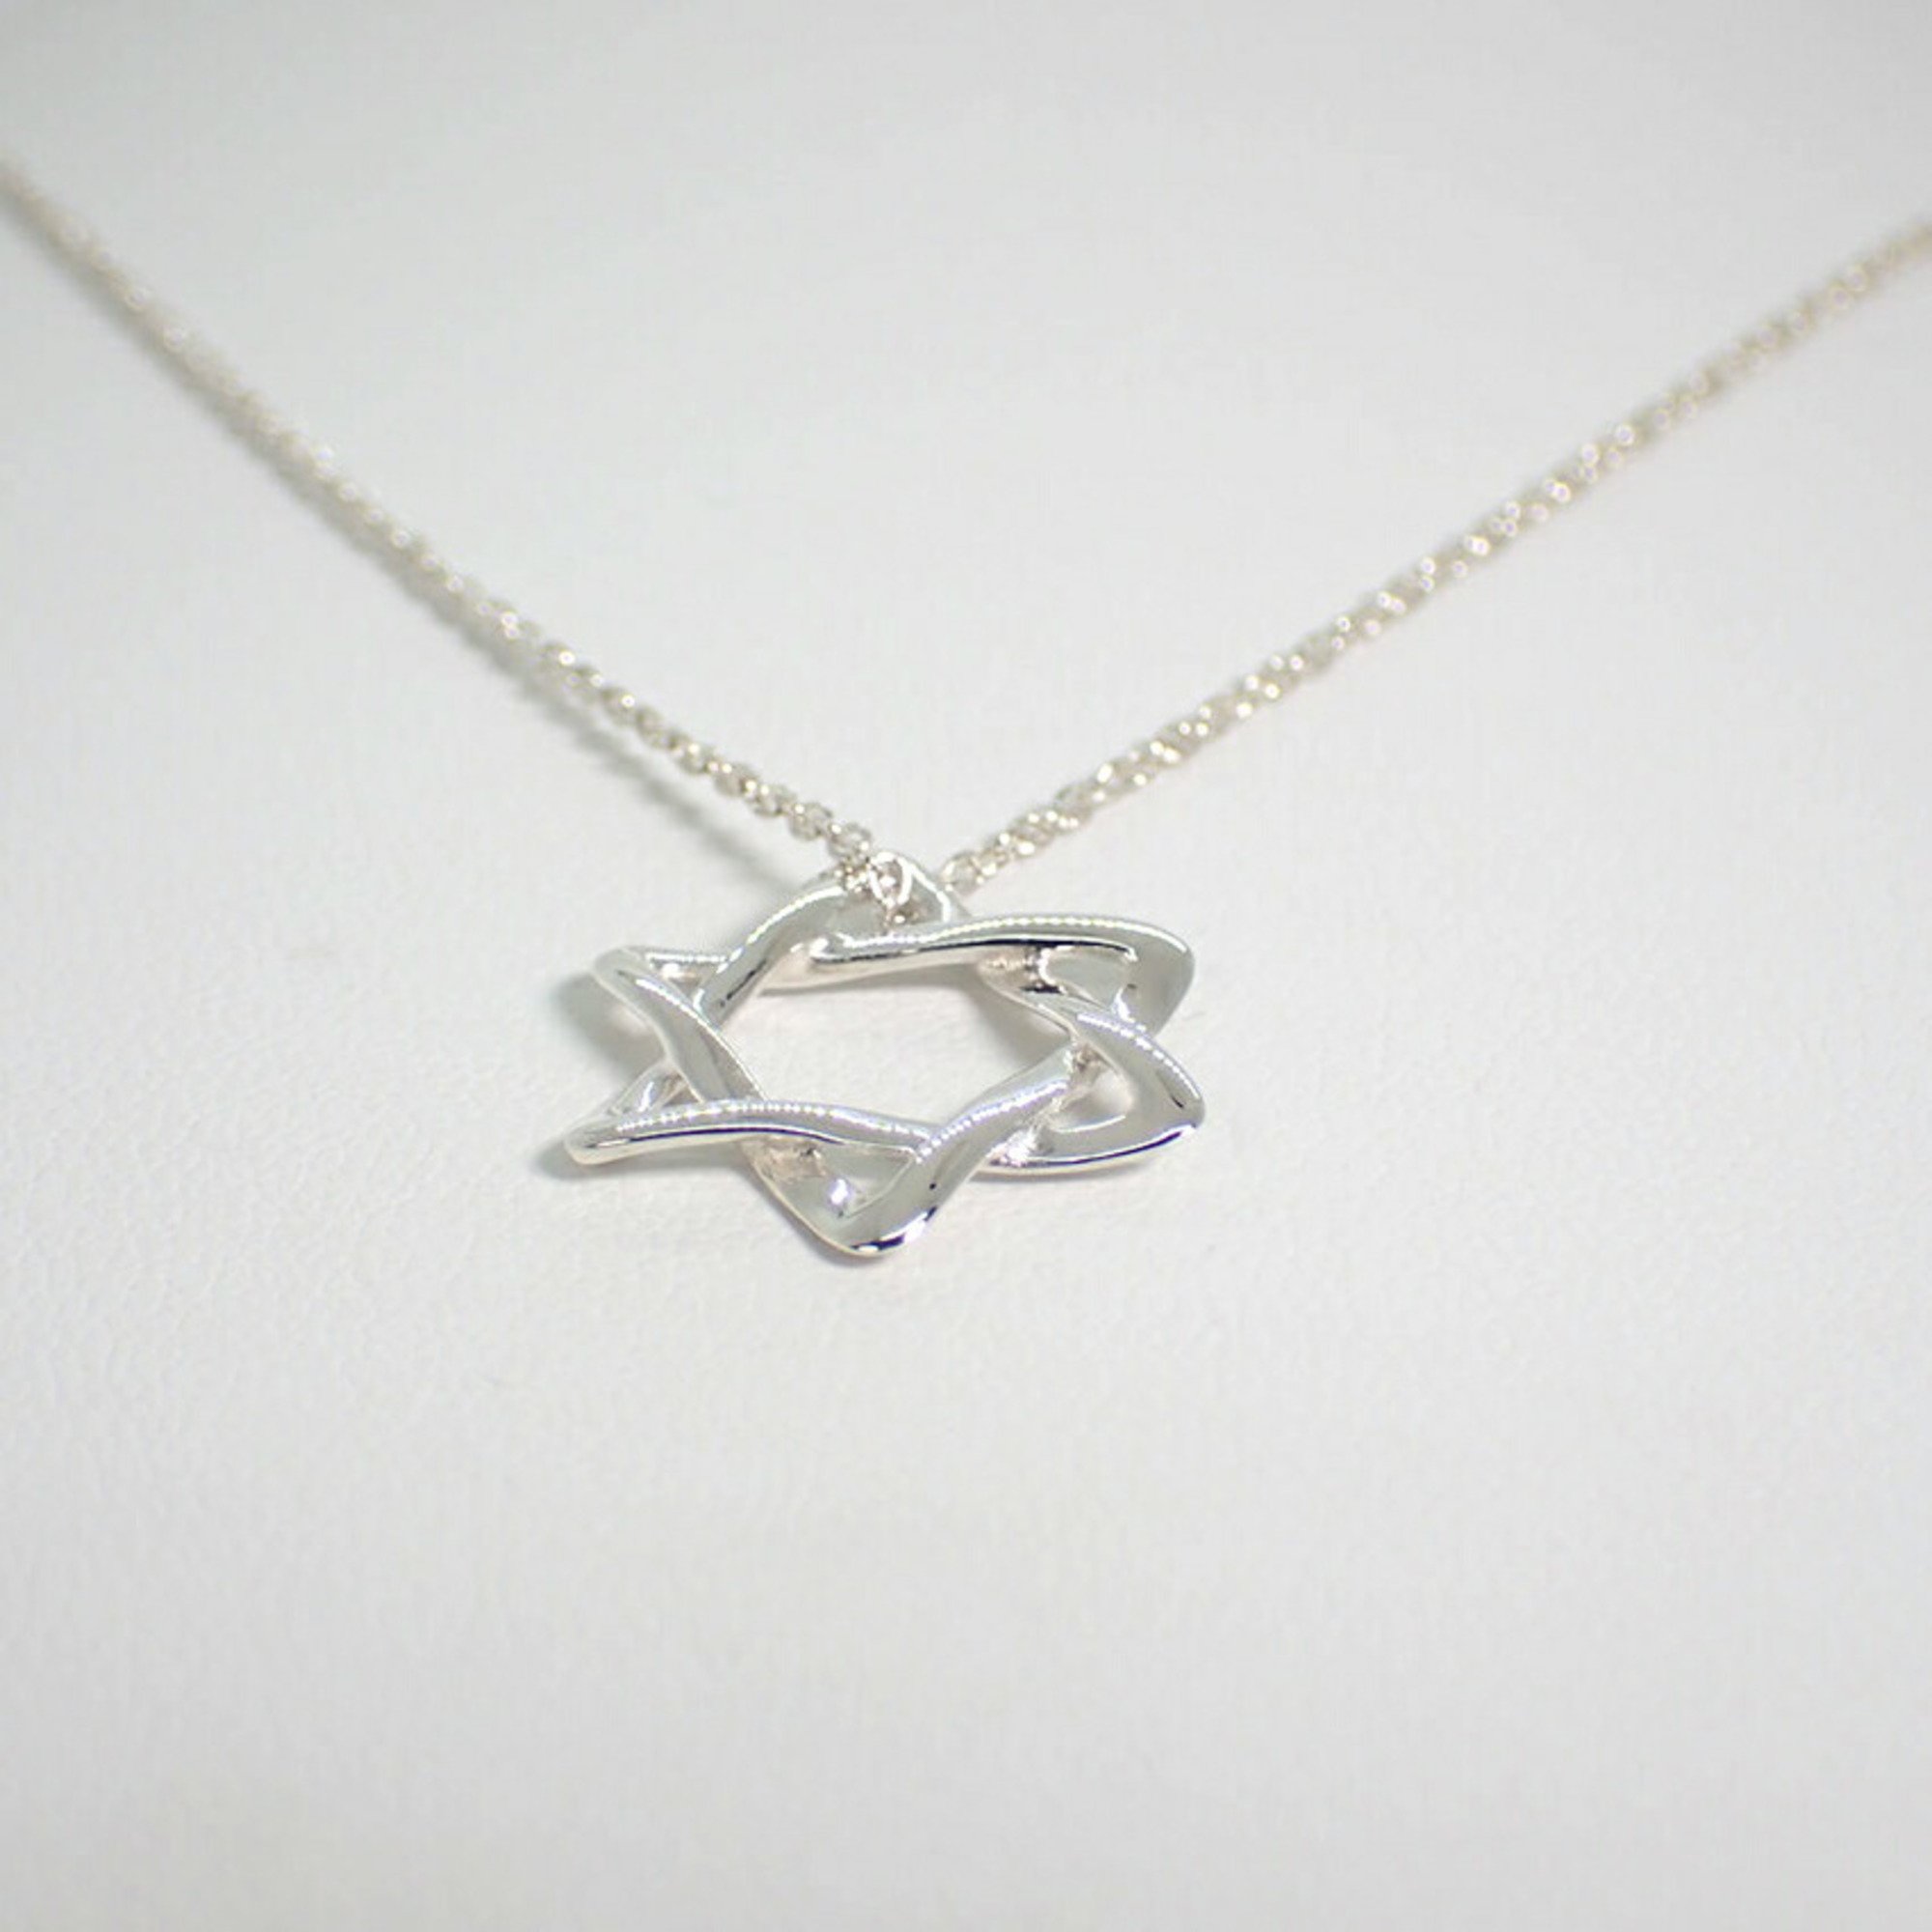 TIFFANY 925 Star of David pendant necklace